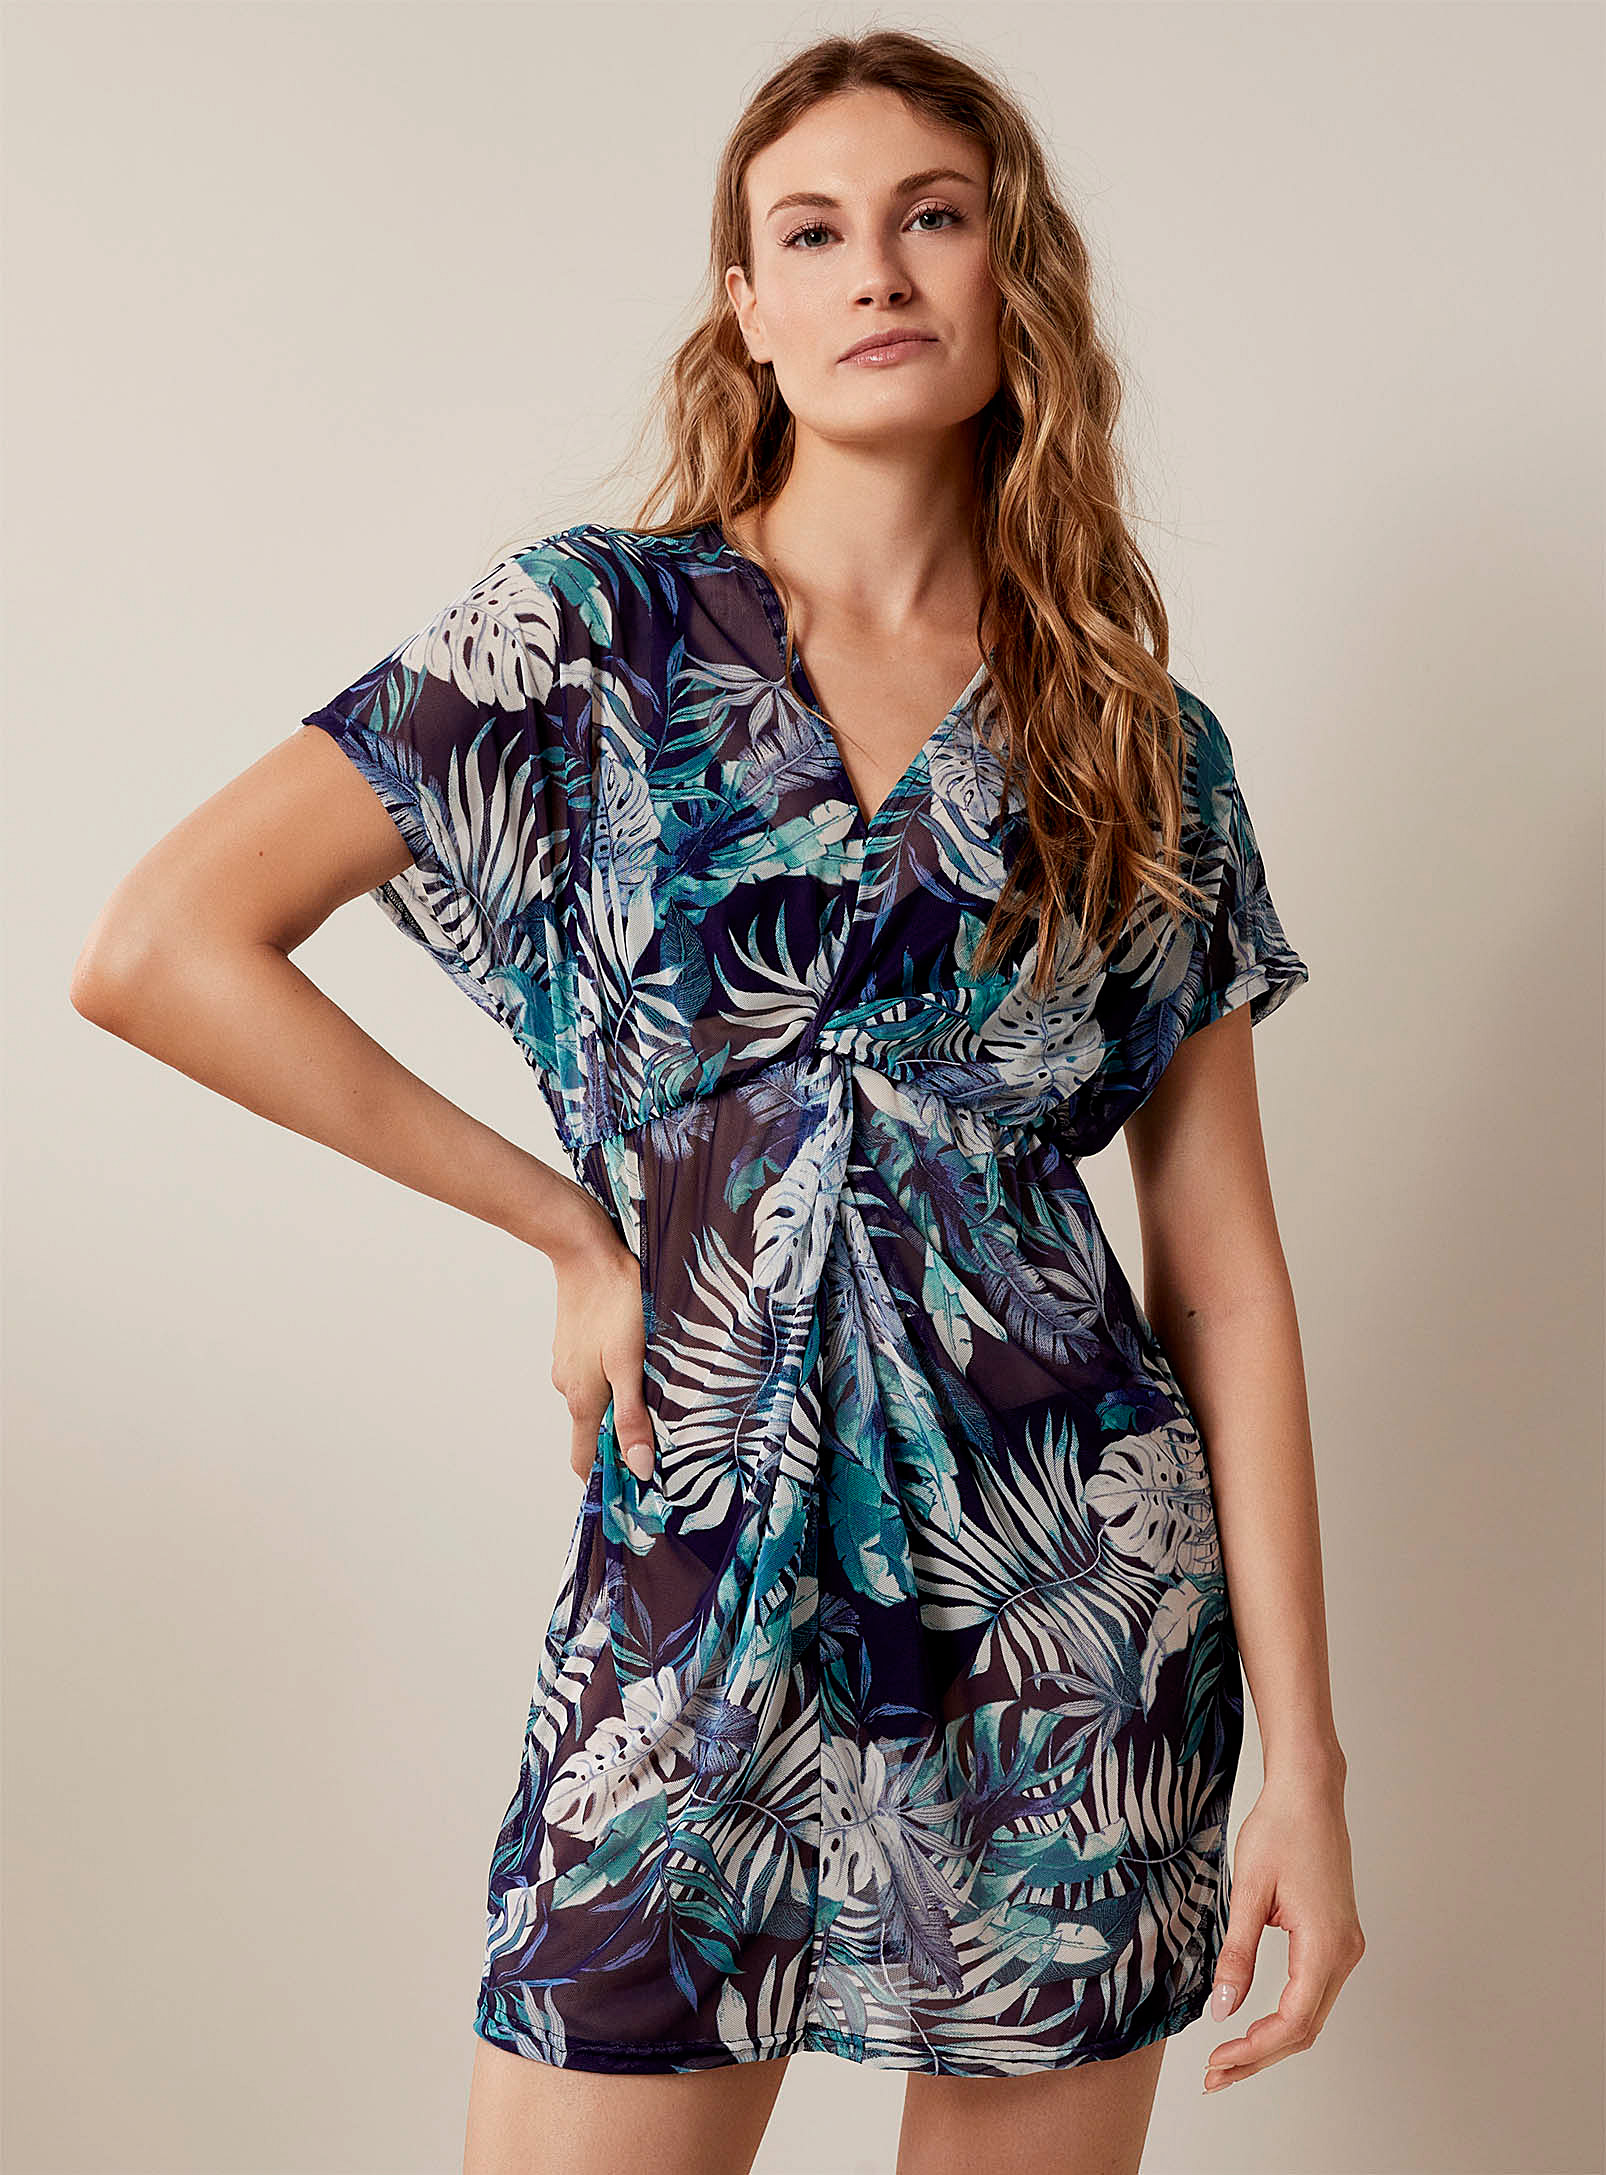 Cover Me - Women's Tropical print mesh Tunic Top